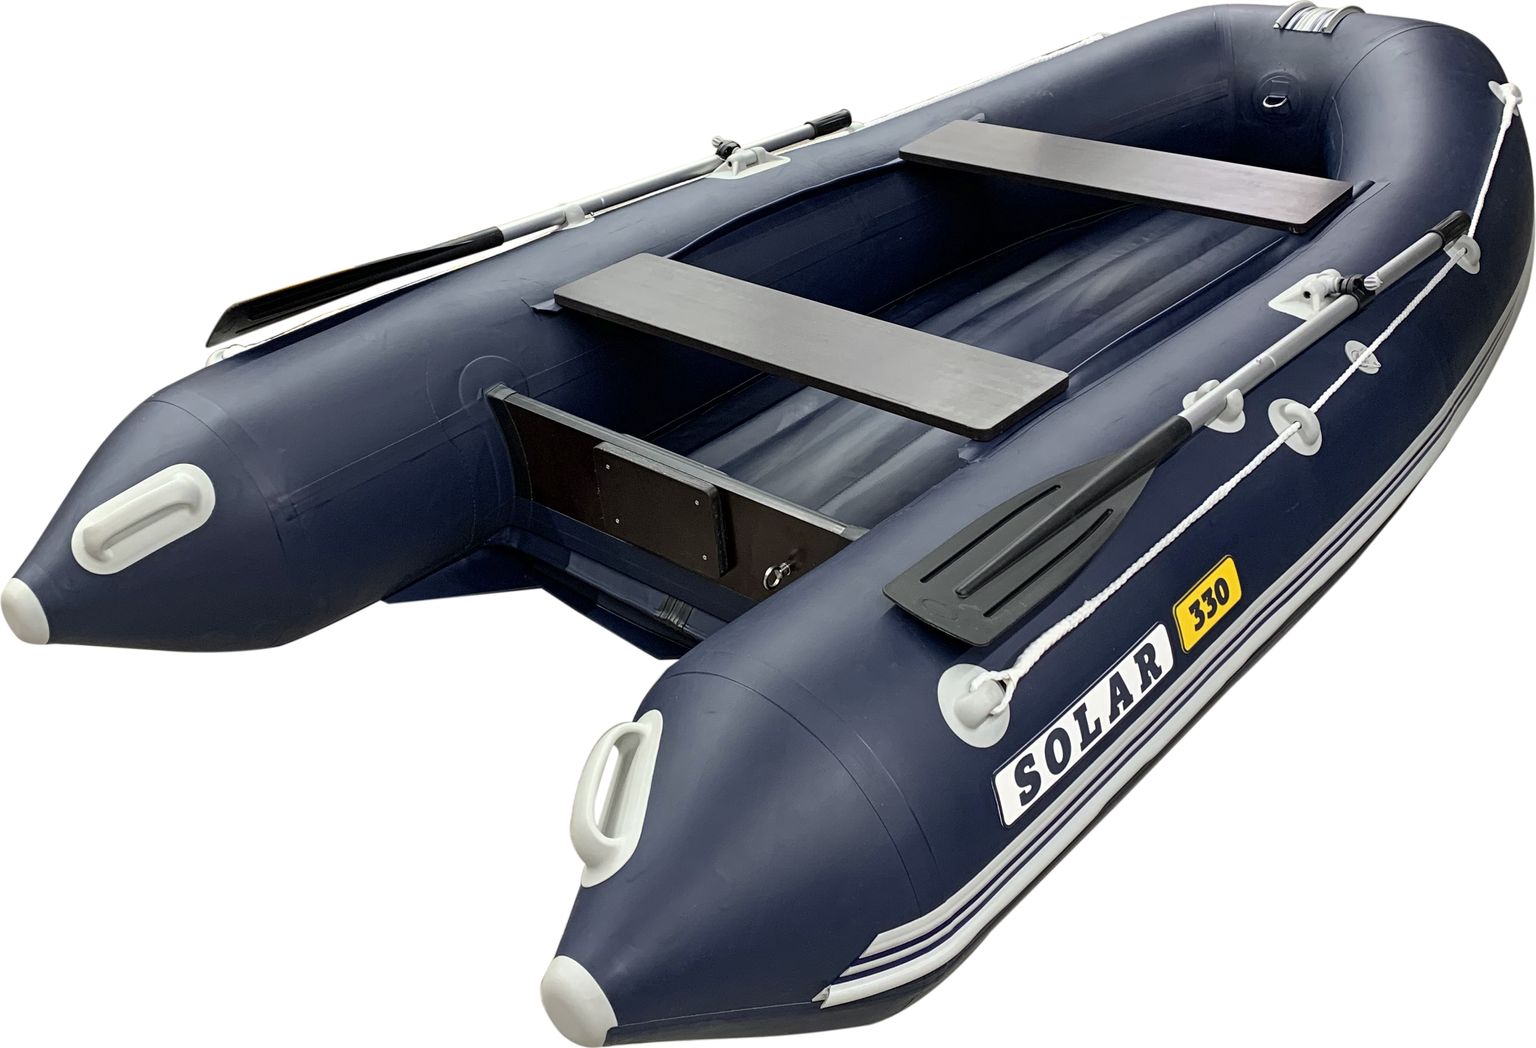 Надувная лодка ПВХ SOLAR-330 К (Оптима), синий SLR330k_opt_blue надувная лодка пвх solar 350 к максима оранжевый slr350k max orange